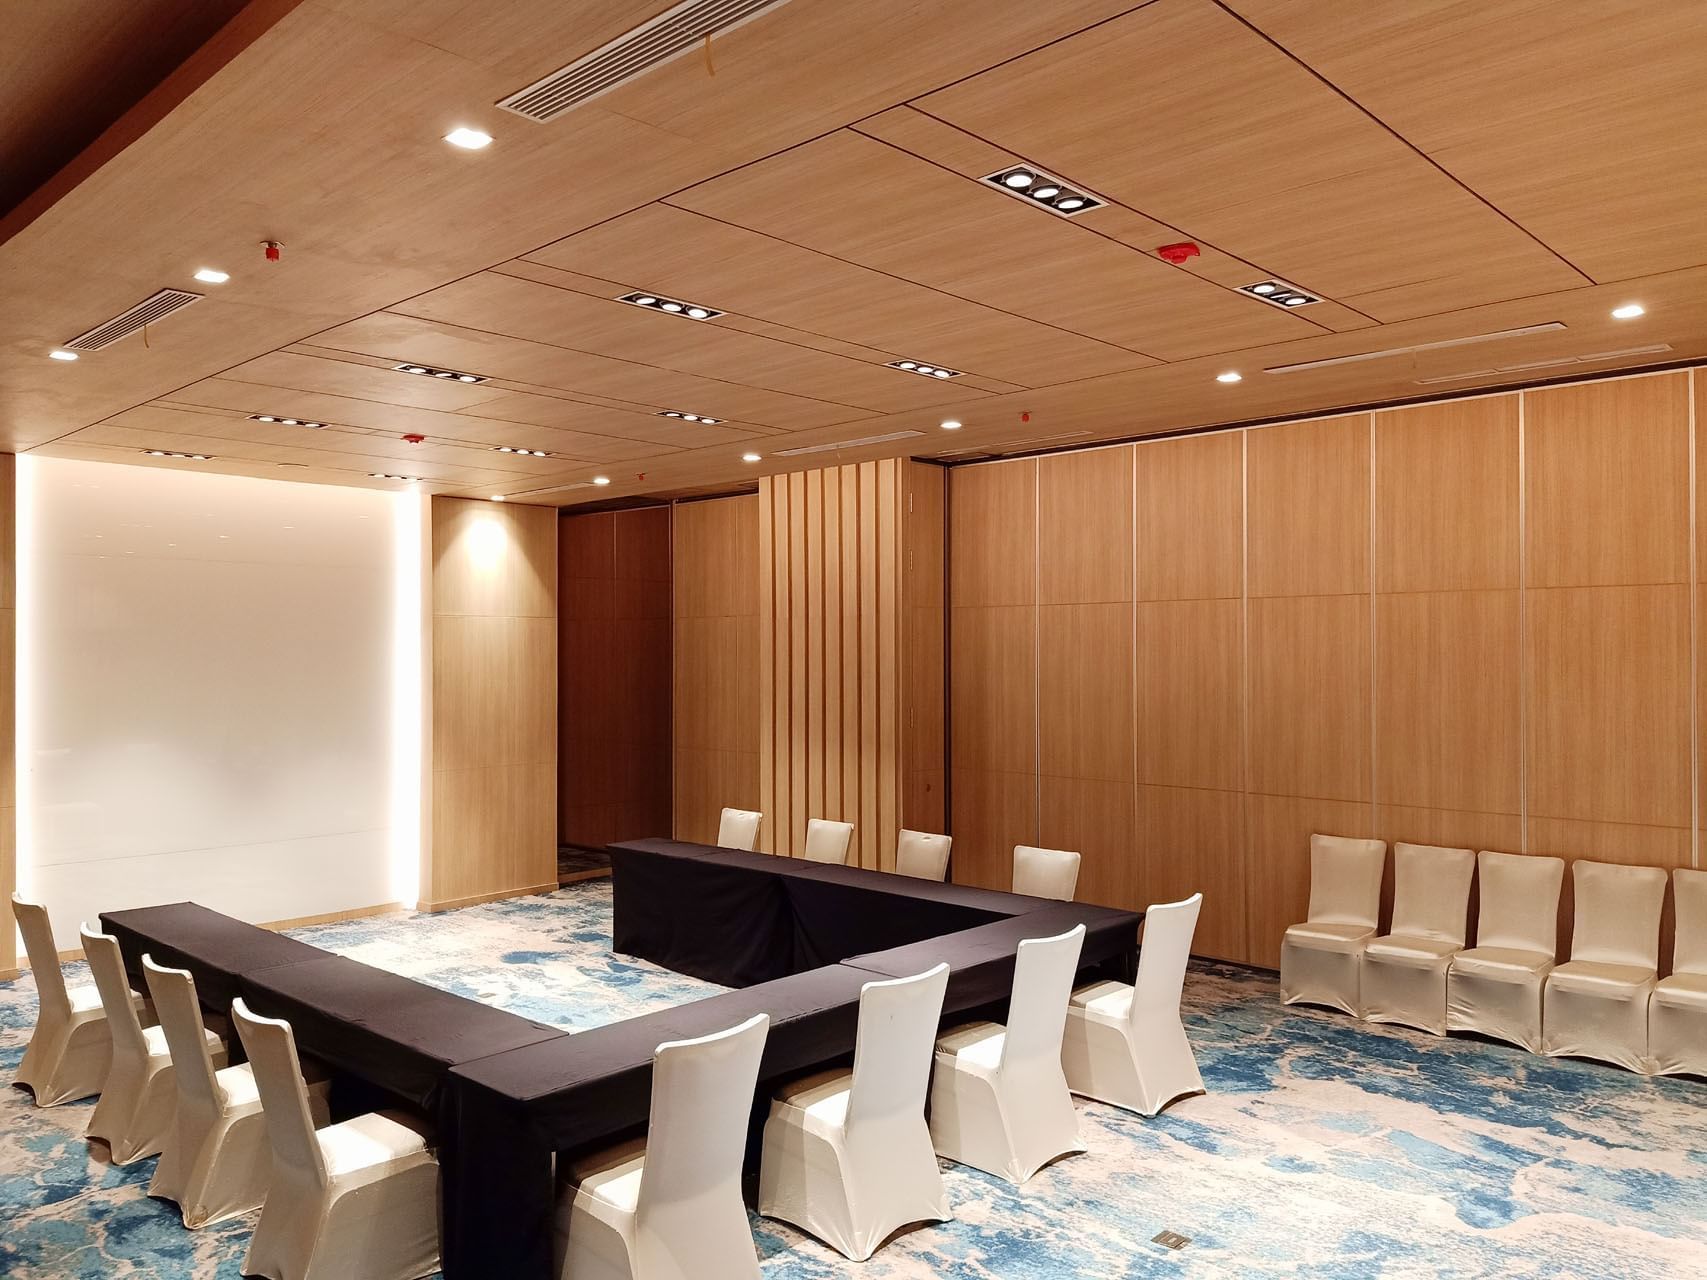 U shaped table set up in Meeting Room 2 with carpeted floors at LK Cikarang Hotel & Residences